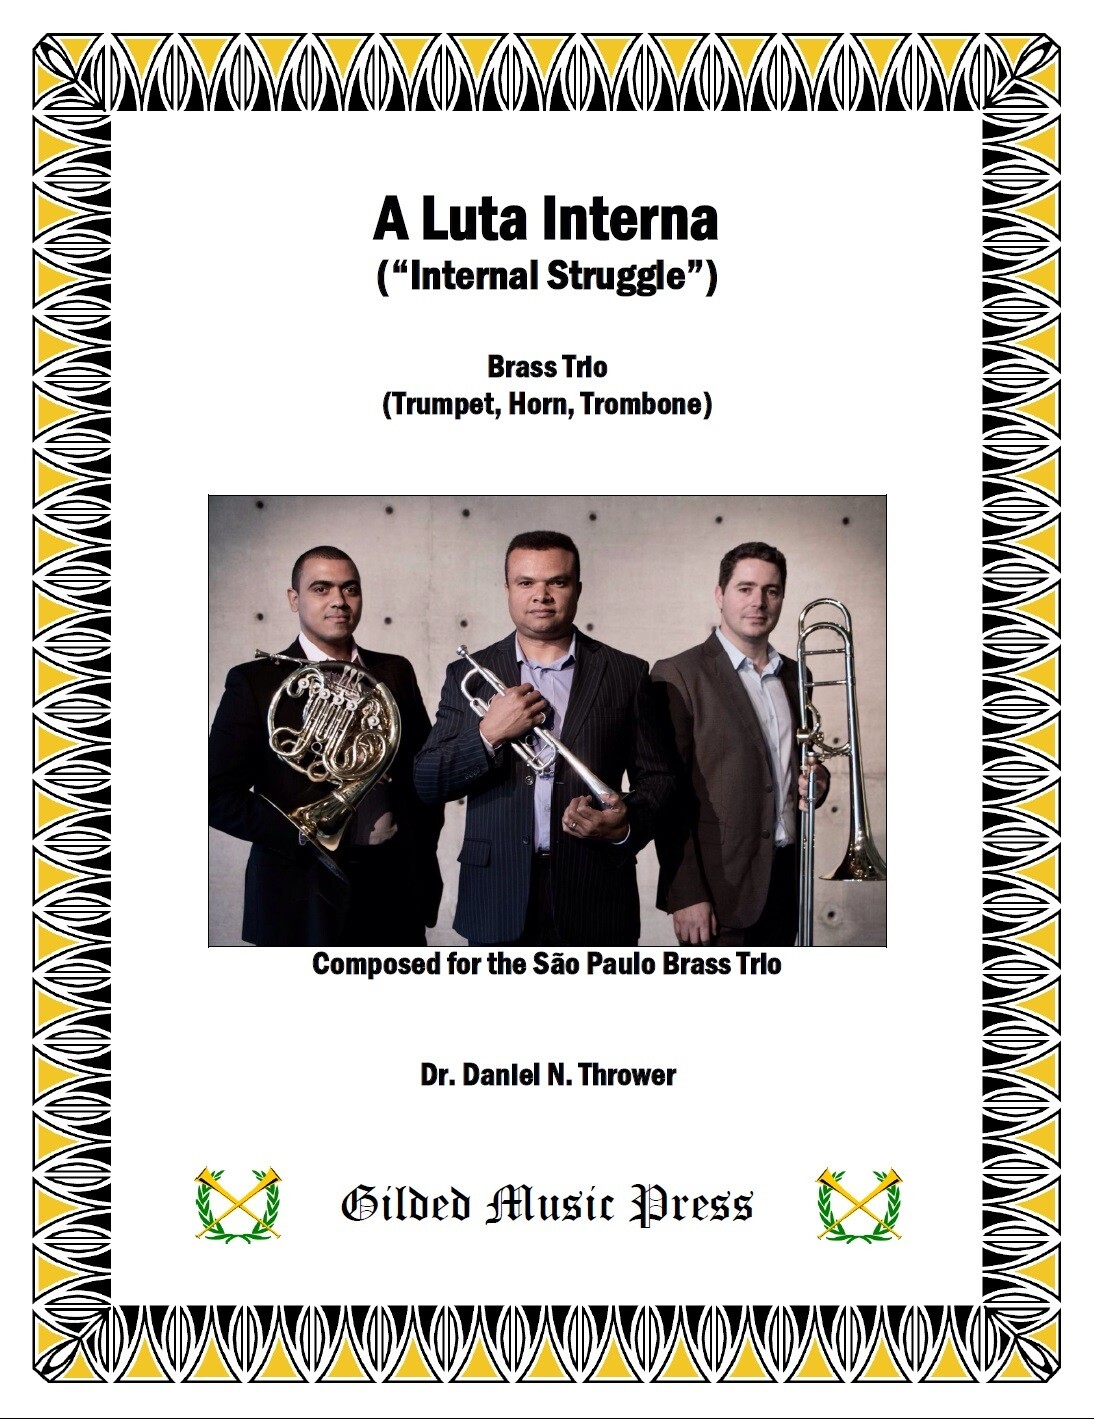 GMP 3301: A Luta Interna ("Internal Struggle" for Brass Trio), Dr. Daniel Thrower